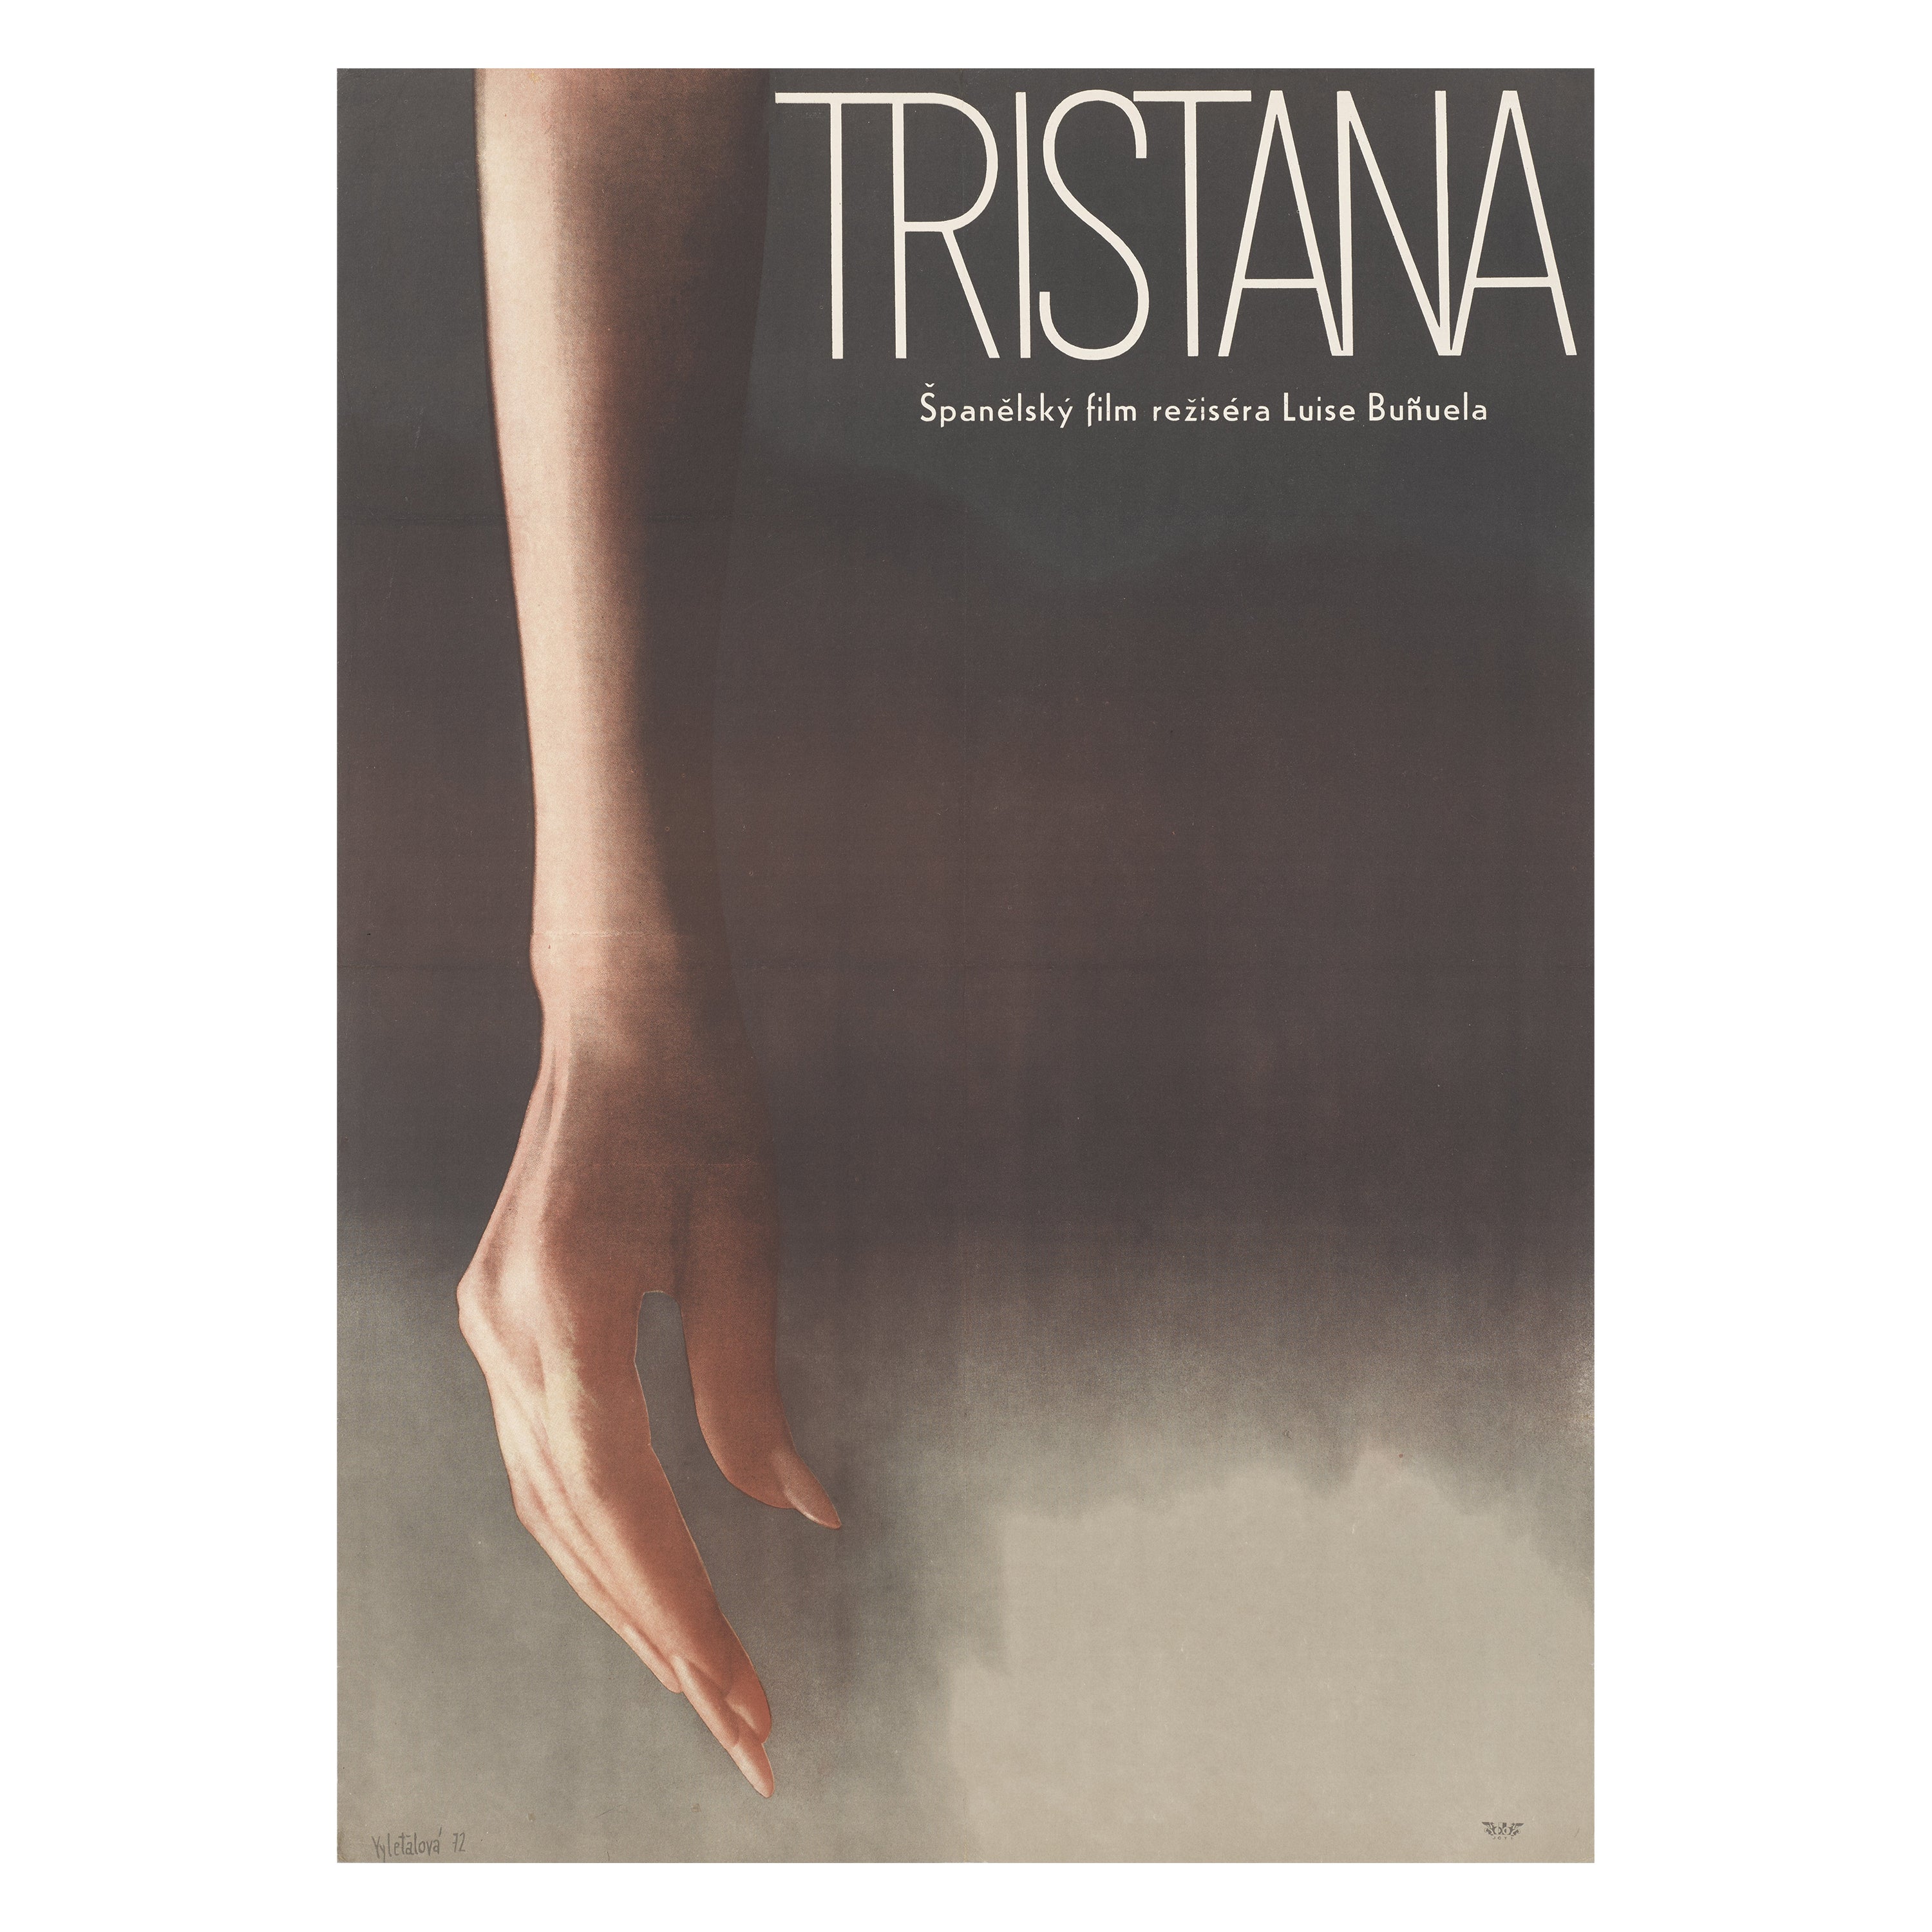 Tristana For Sale